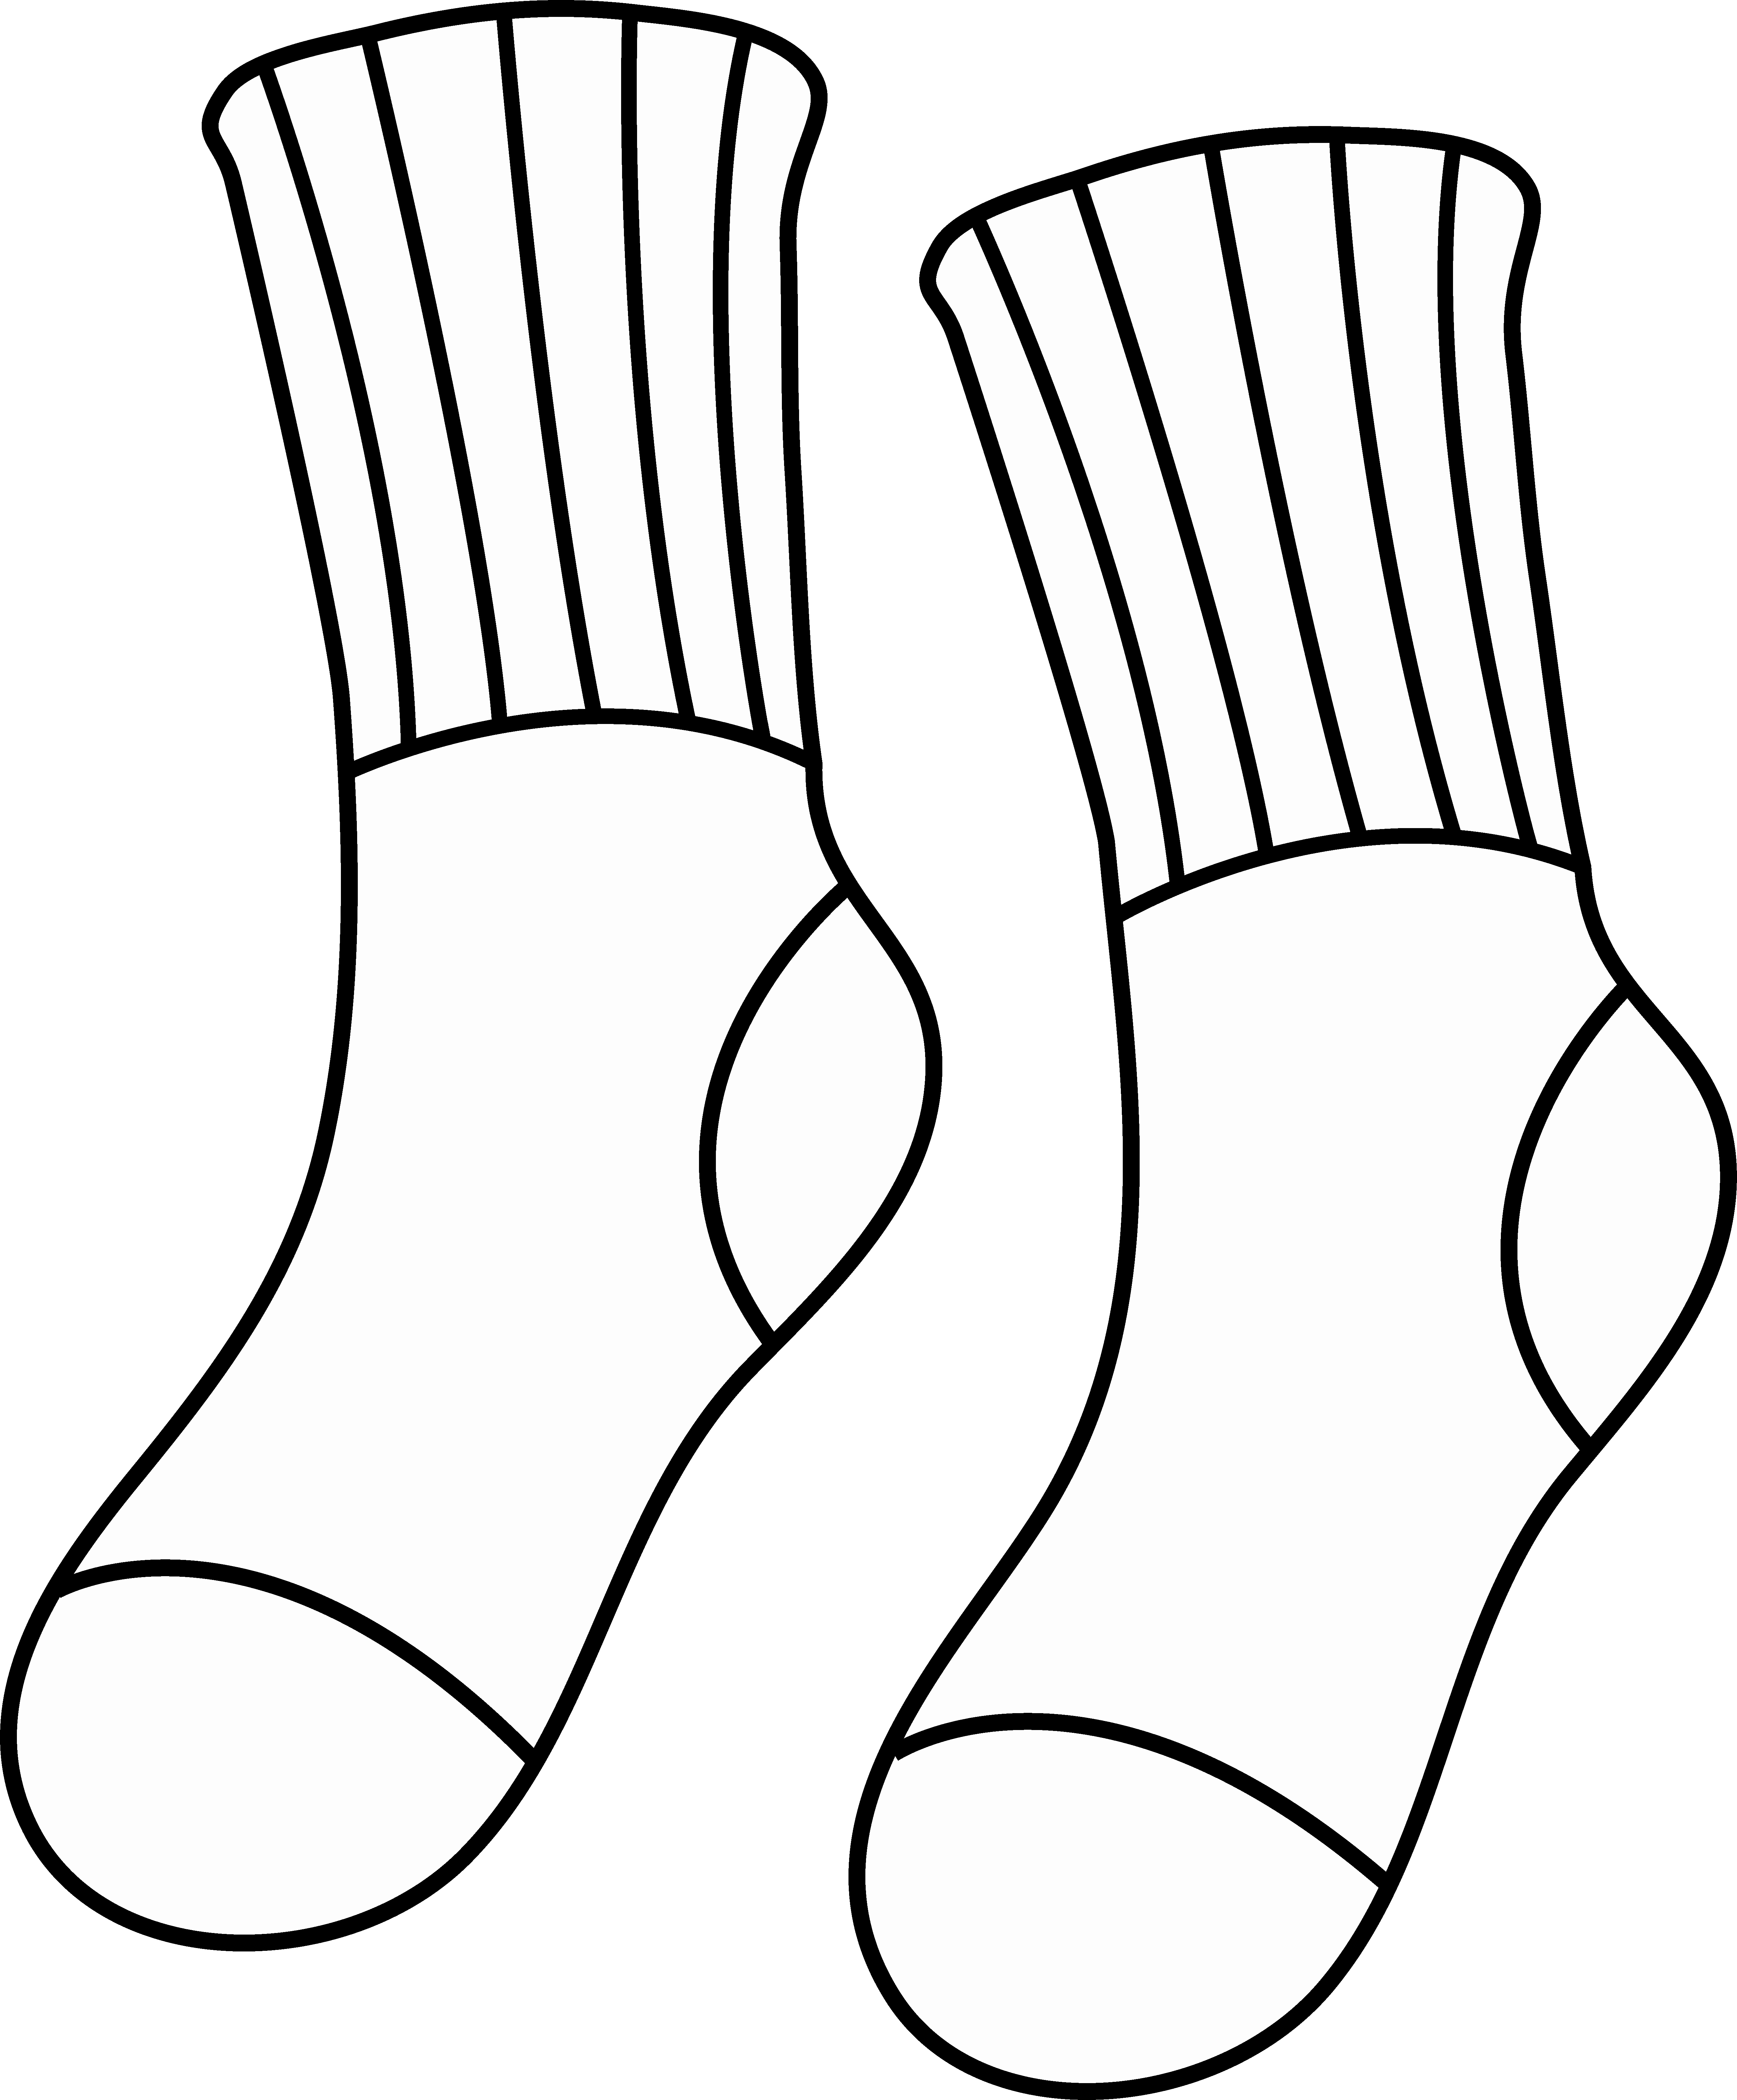 Socks Drawing at GetDrawings | Free download